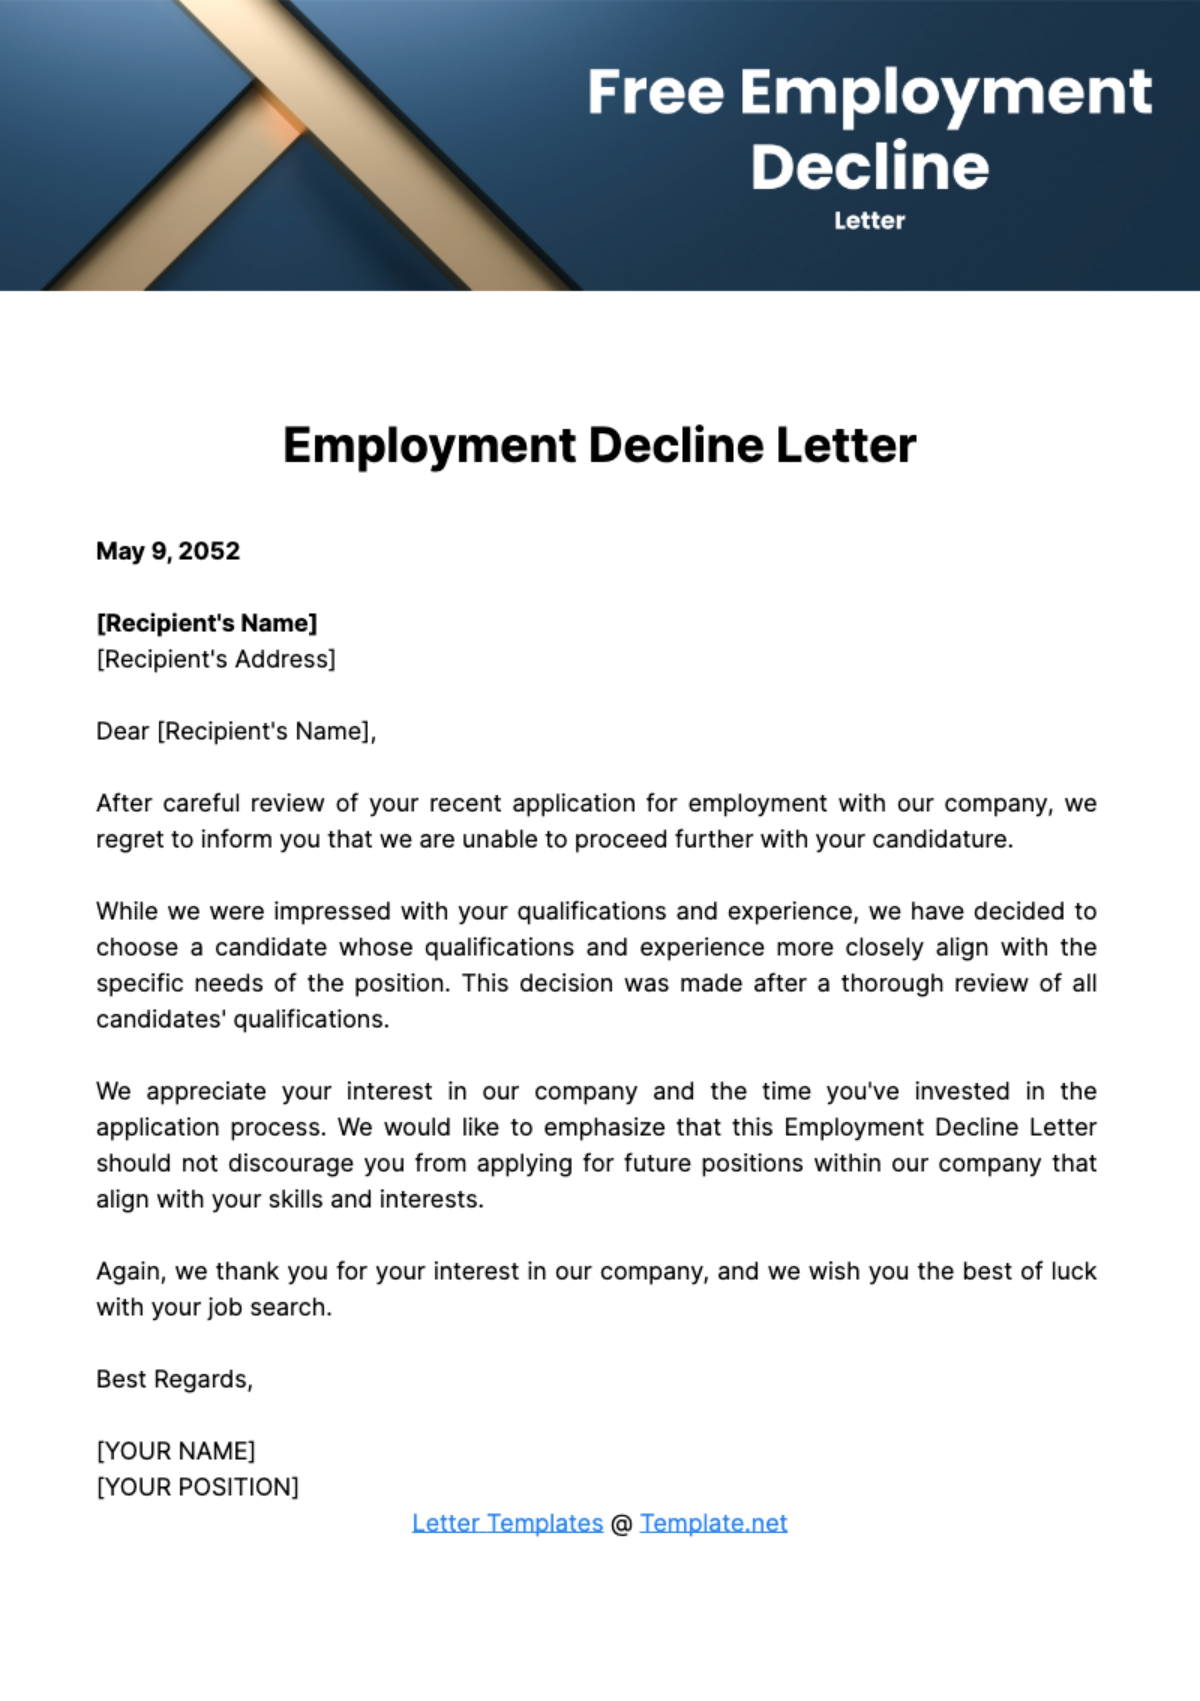 Free Employment Decline Letter Template